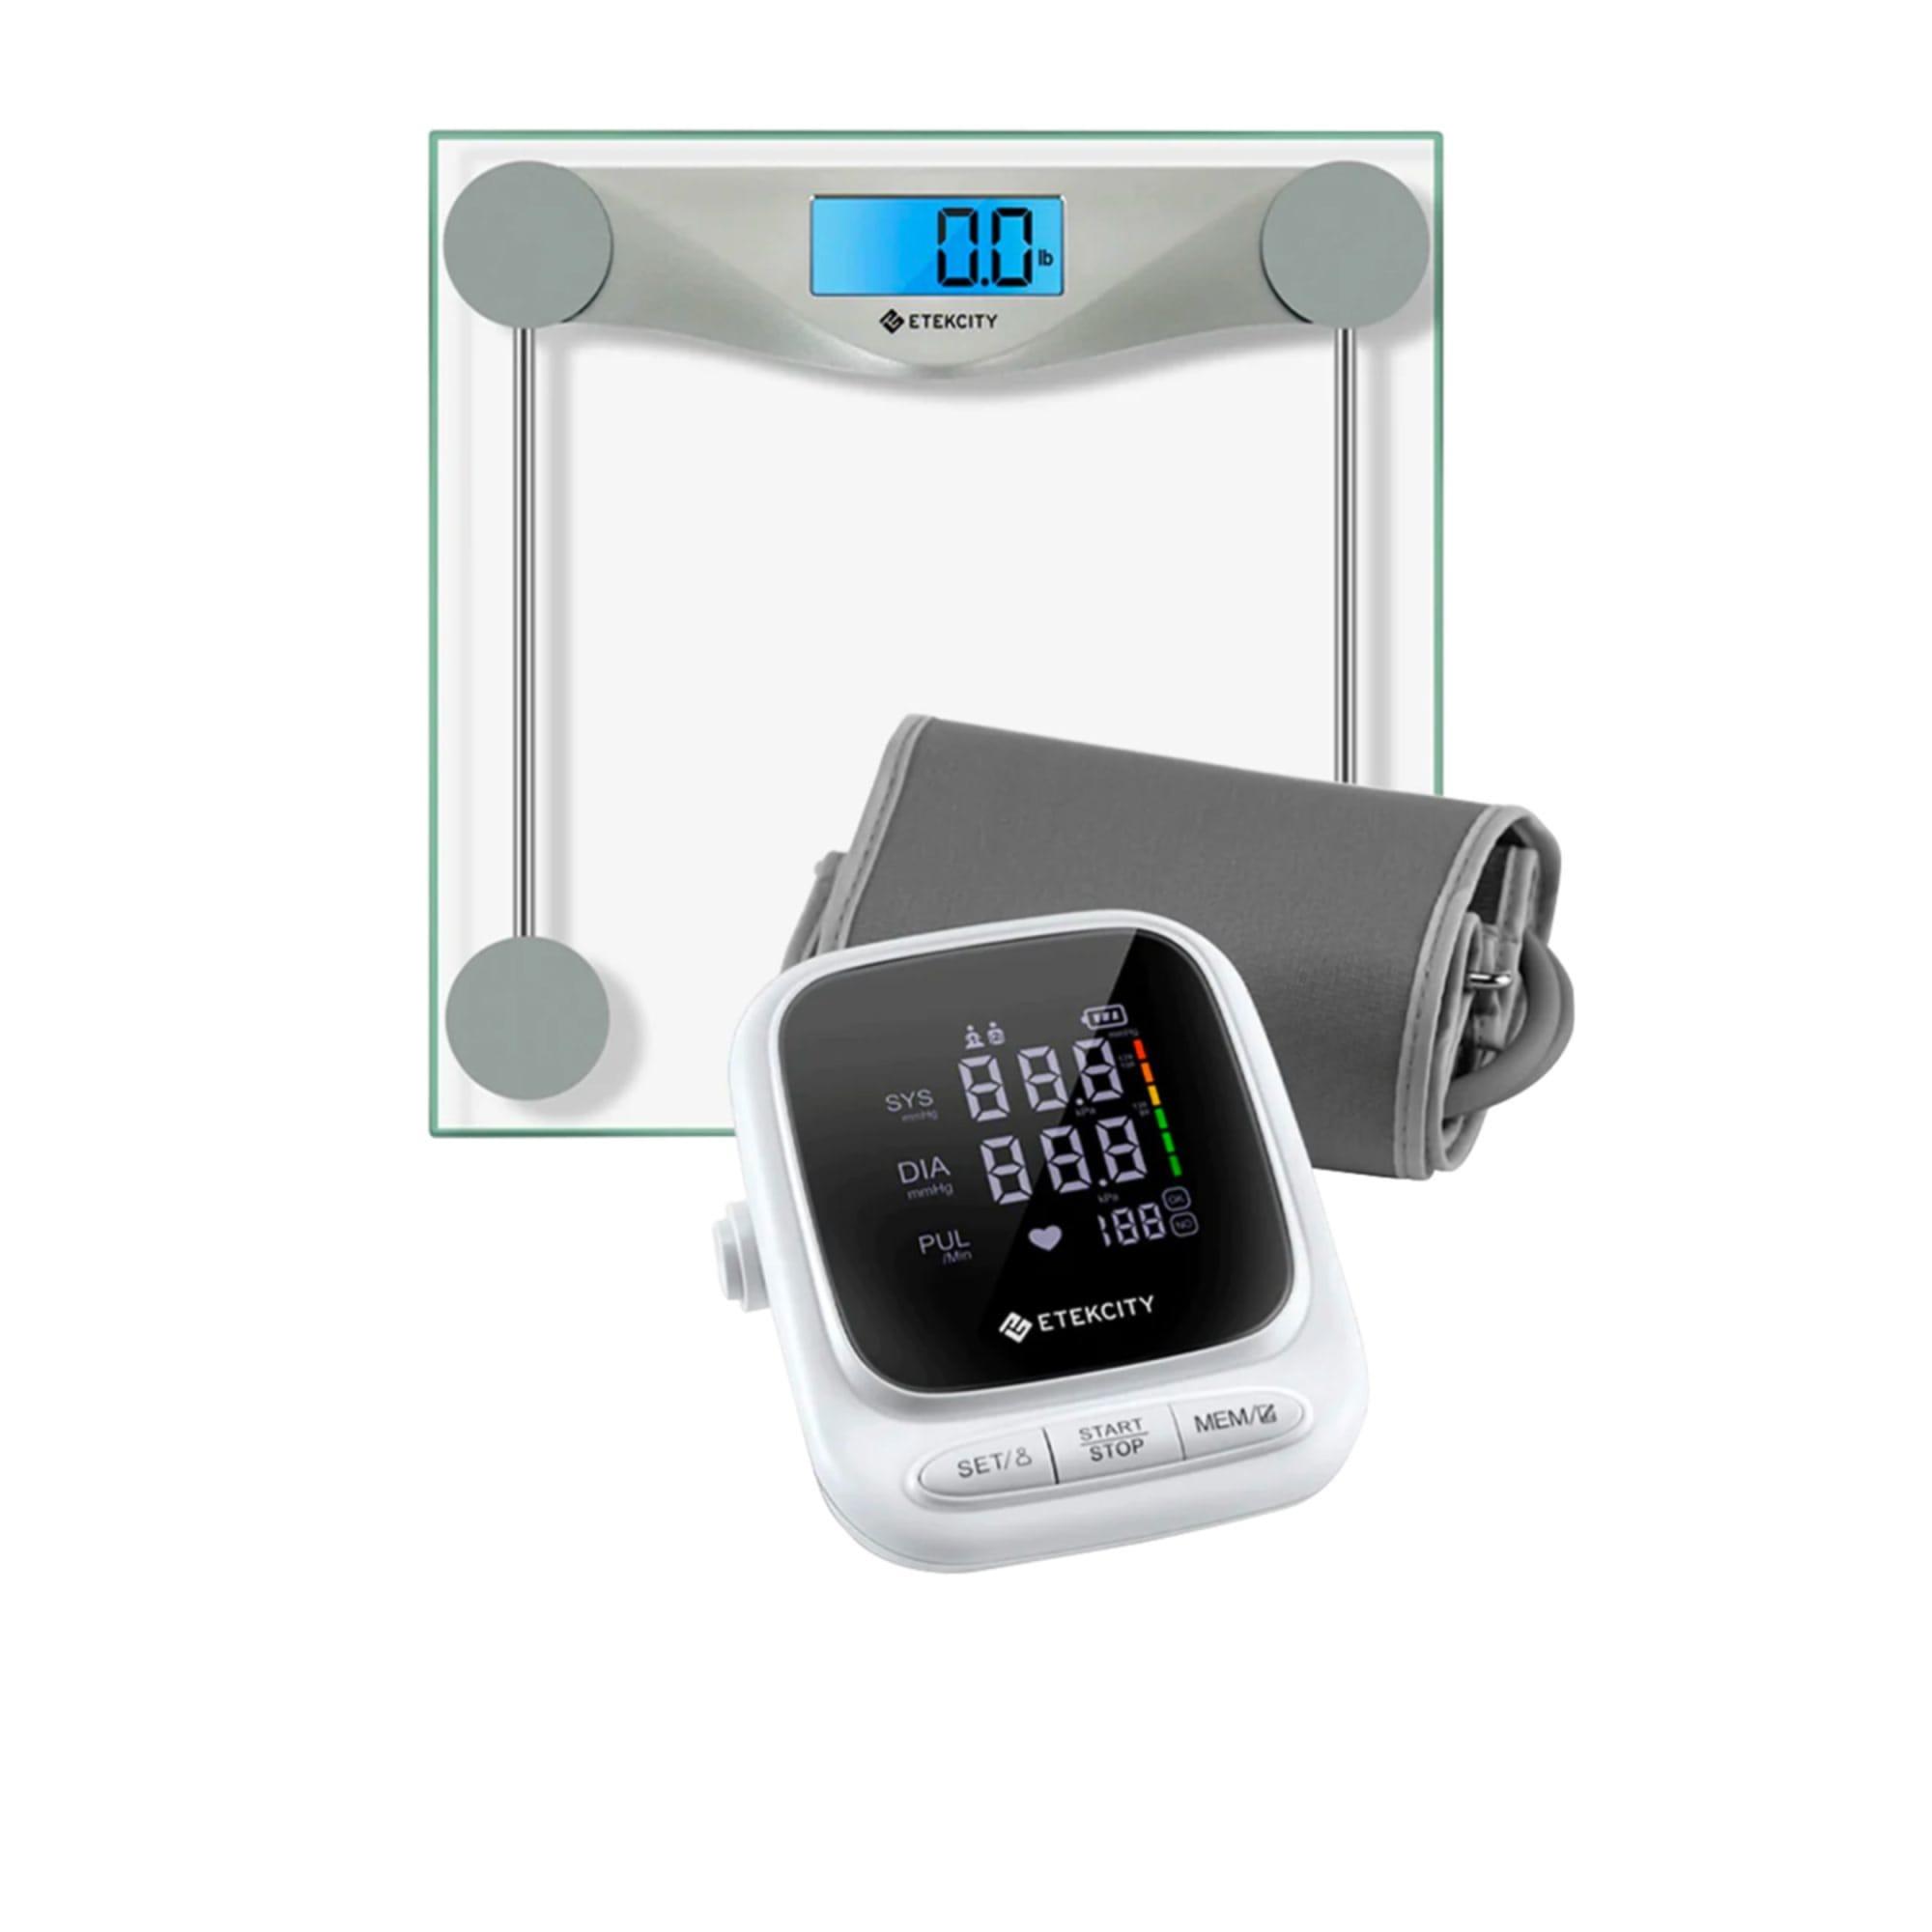 Etekcity Digital Bathroom Scale and Smart Blood Presssure Monitor Bundle Silver Image 1